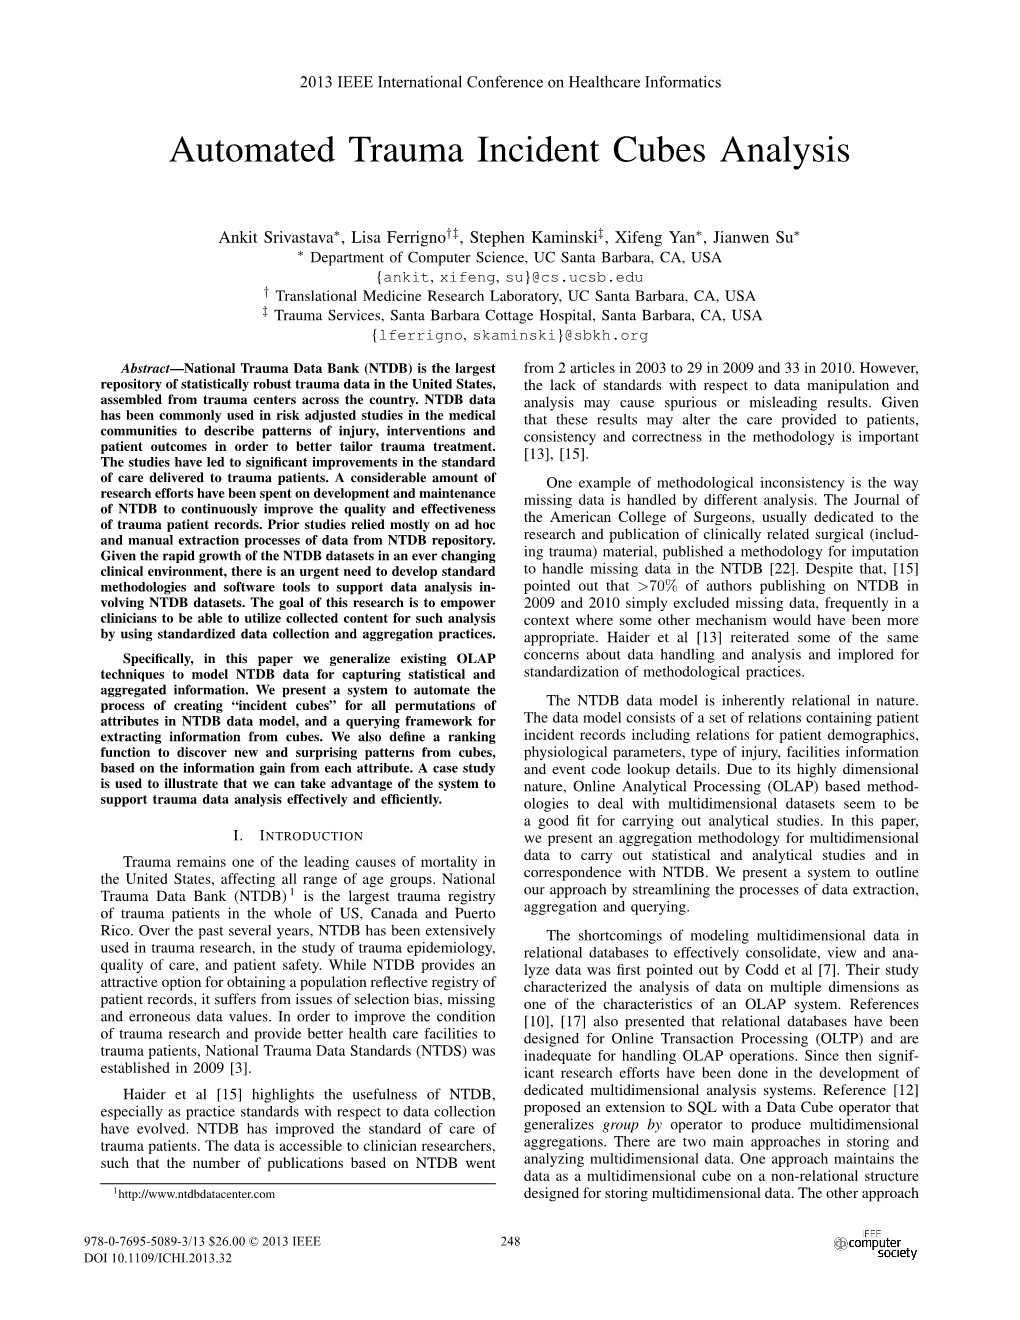 Automated Trauma Incident Cubes Analysis